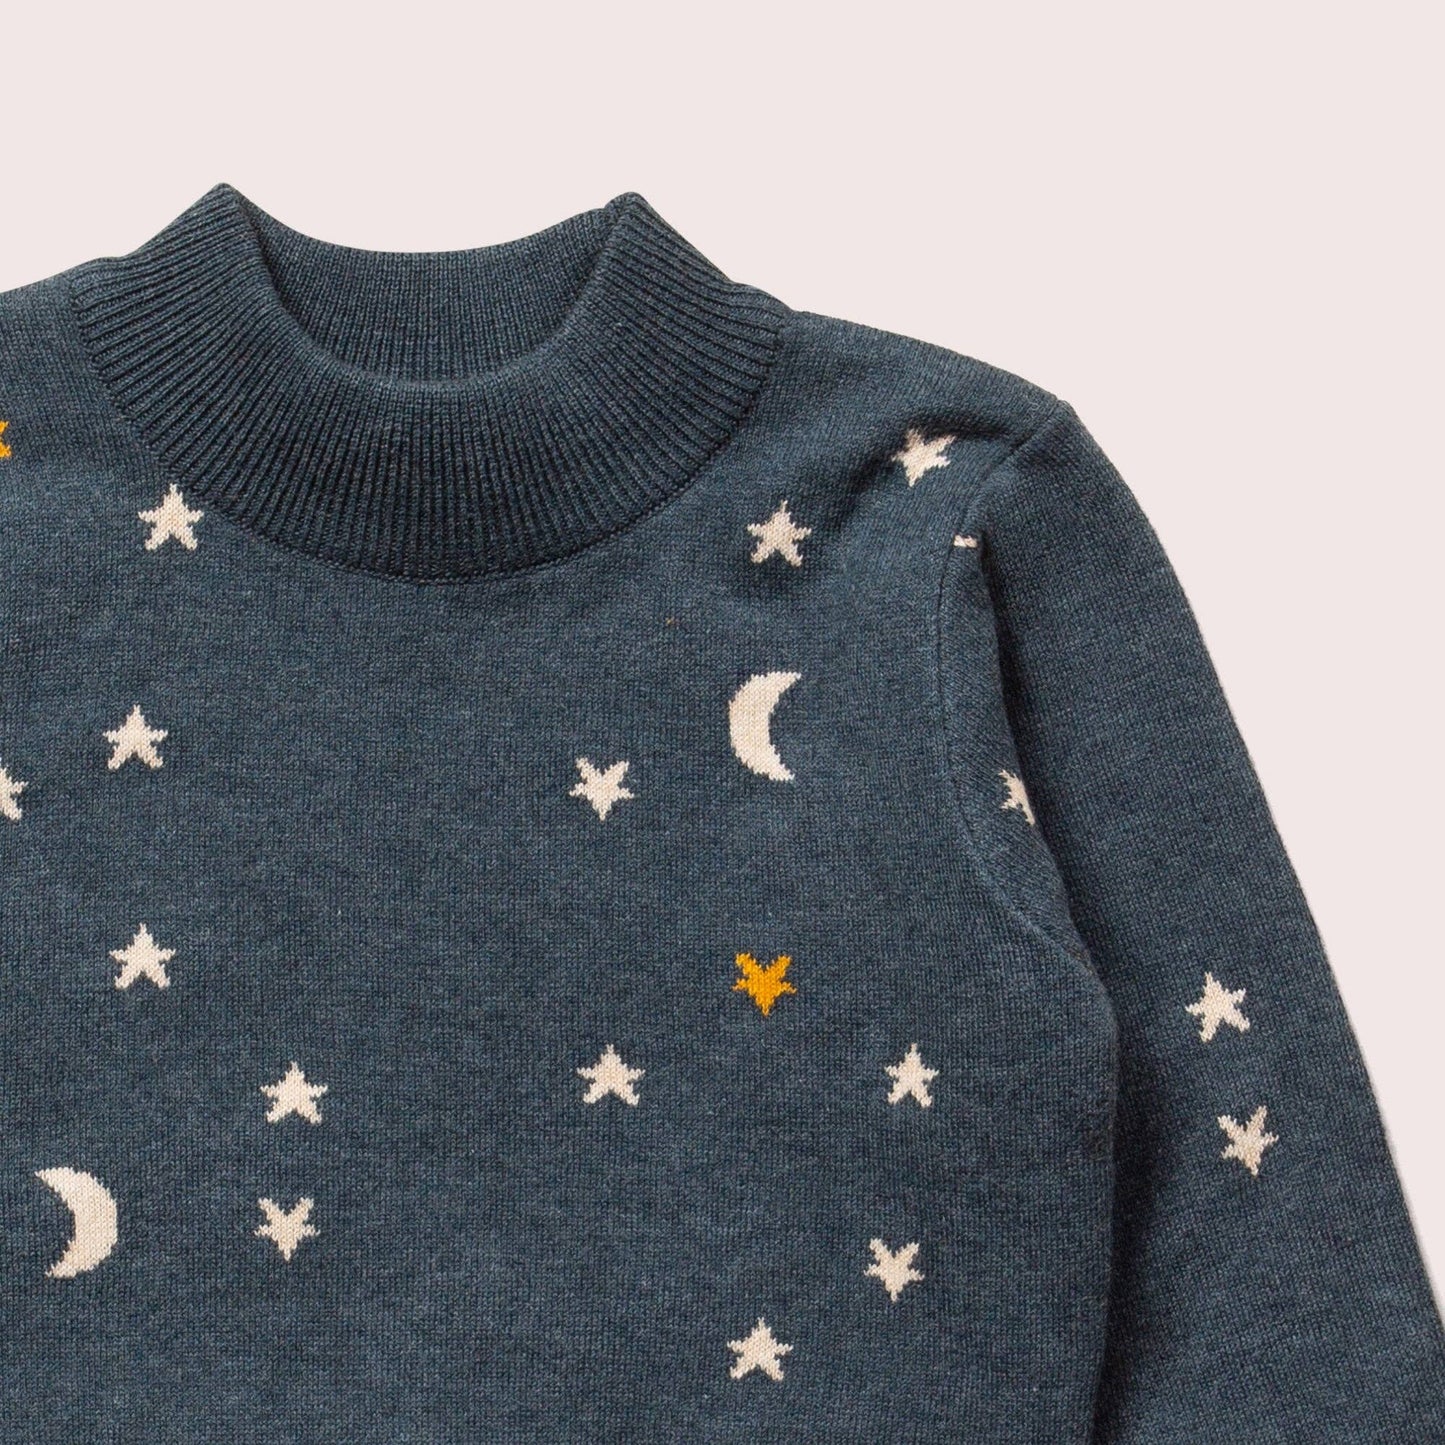 Knitted Sweater - Navy Golden Stars